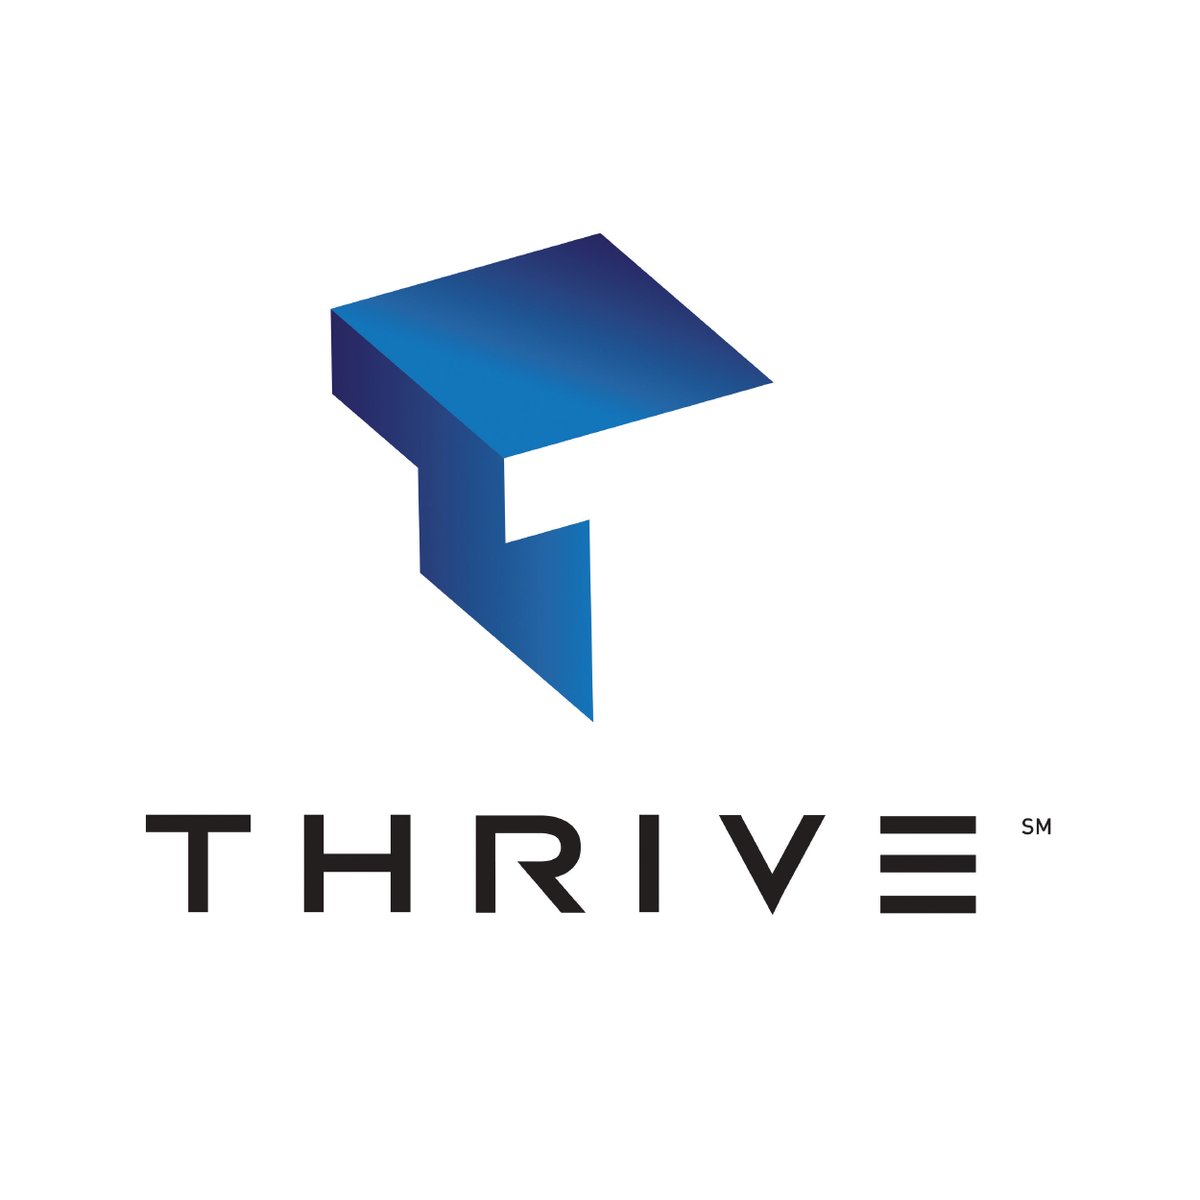 Thrive-01